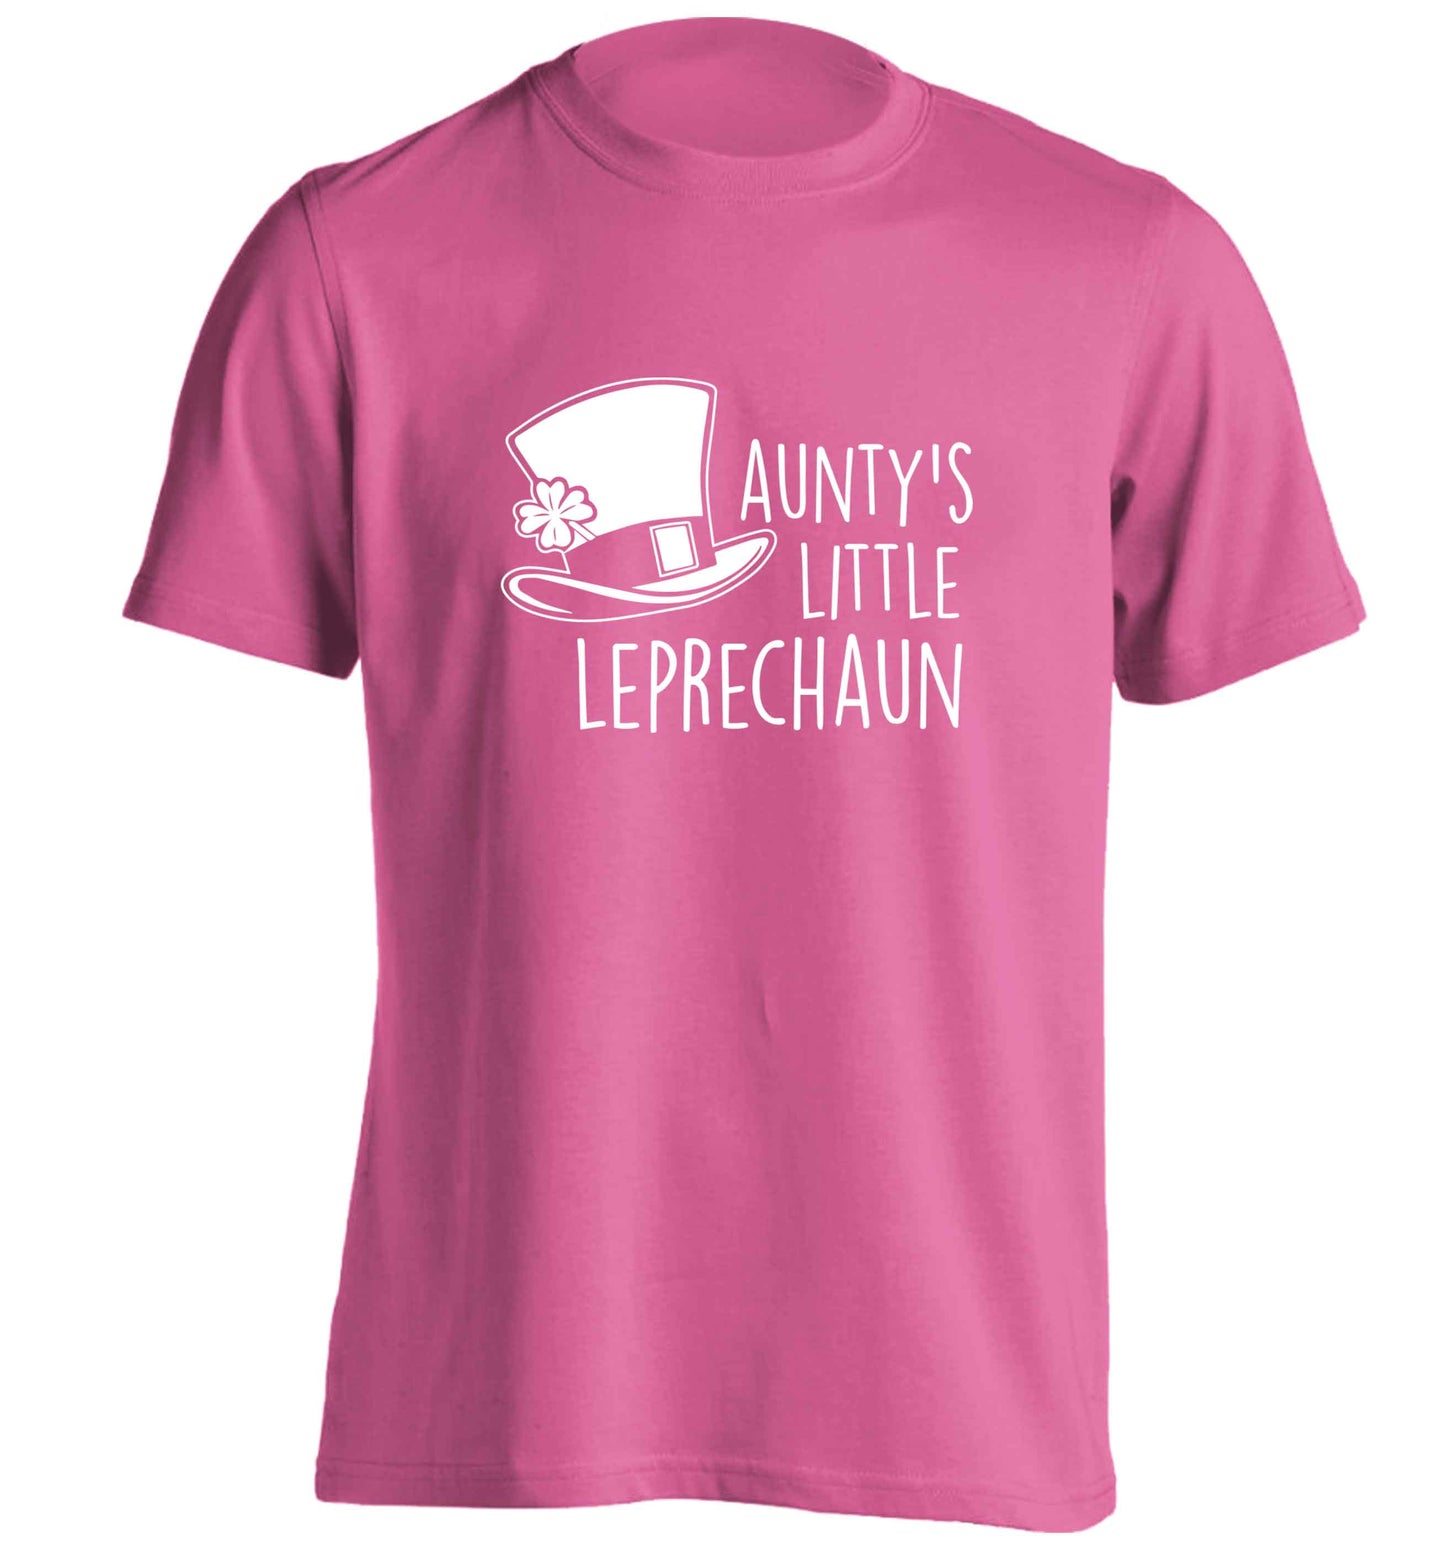 Aunty's little leprechaun adults unisex pink Tshirt 2XL